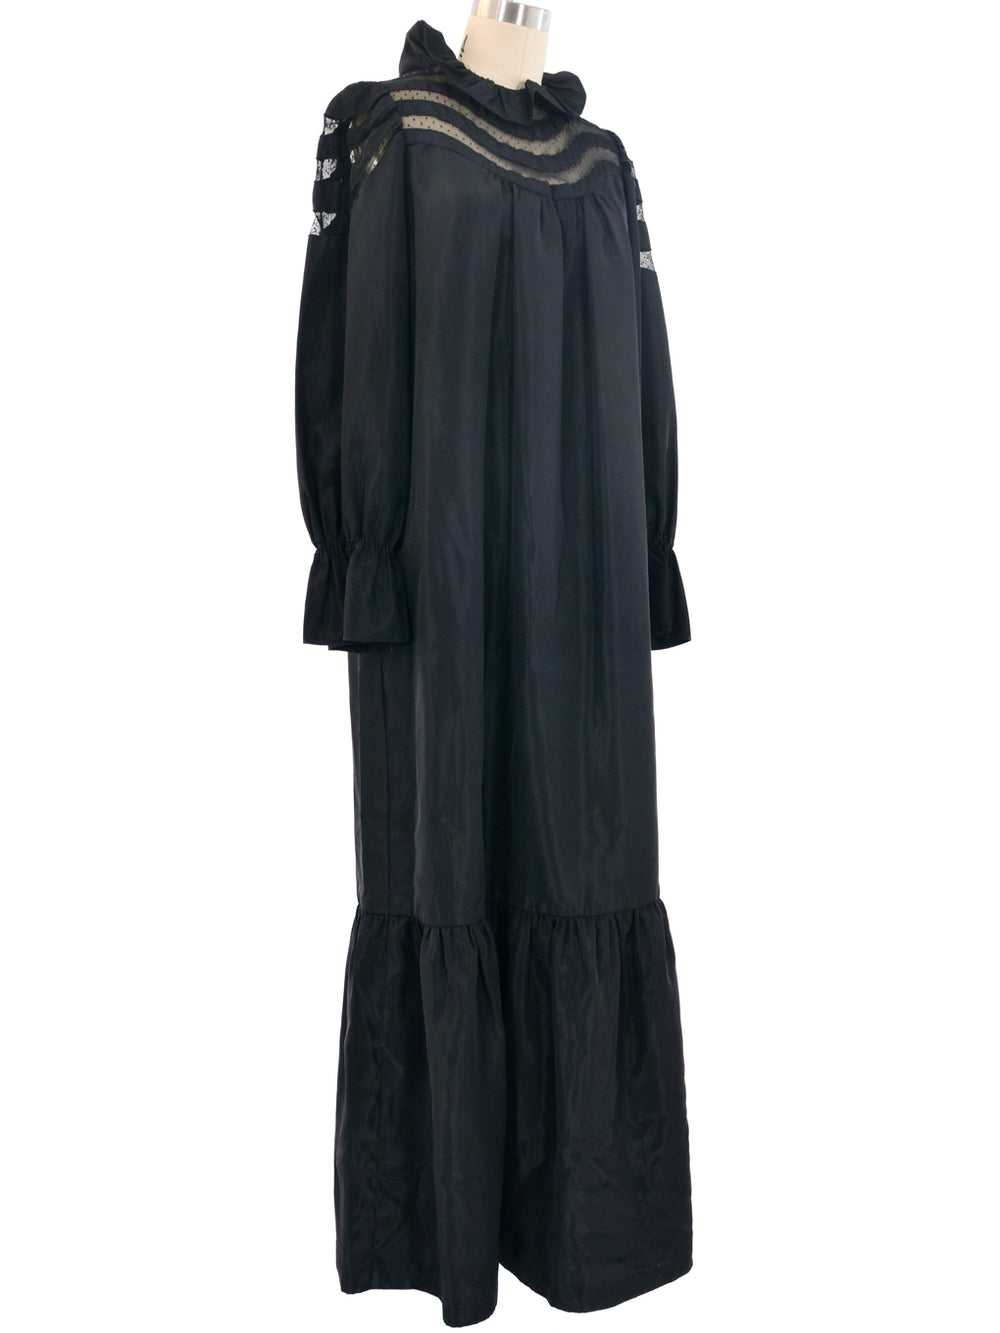 Christian Dior Taffeta Nightgown - image 4